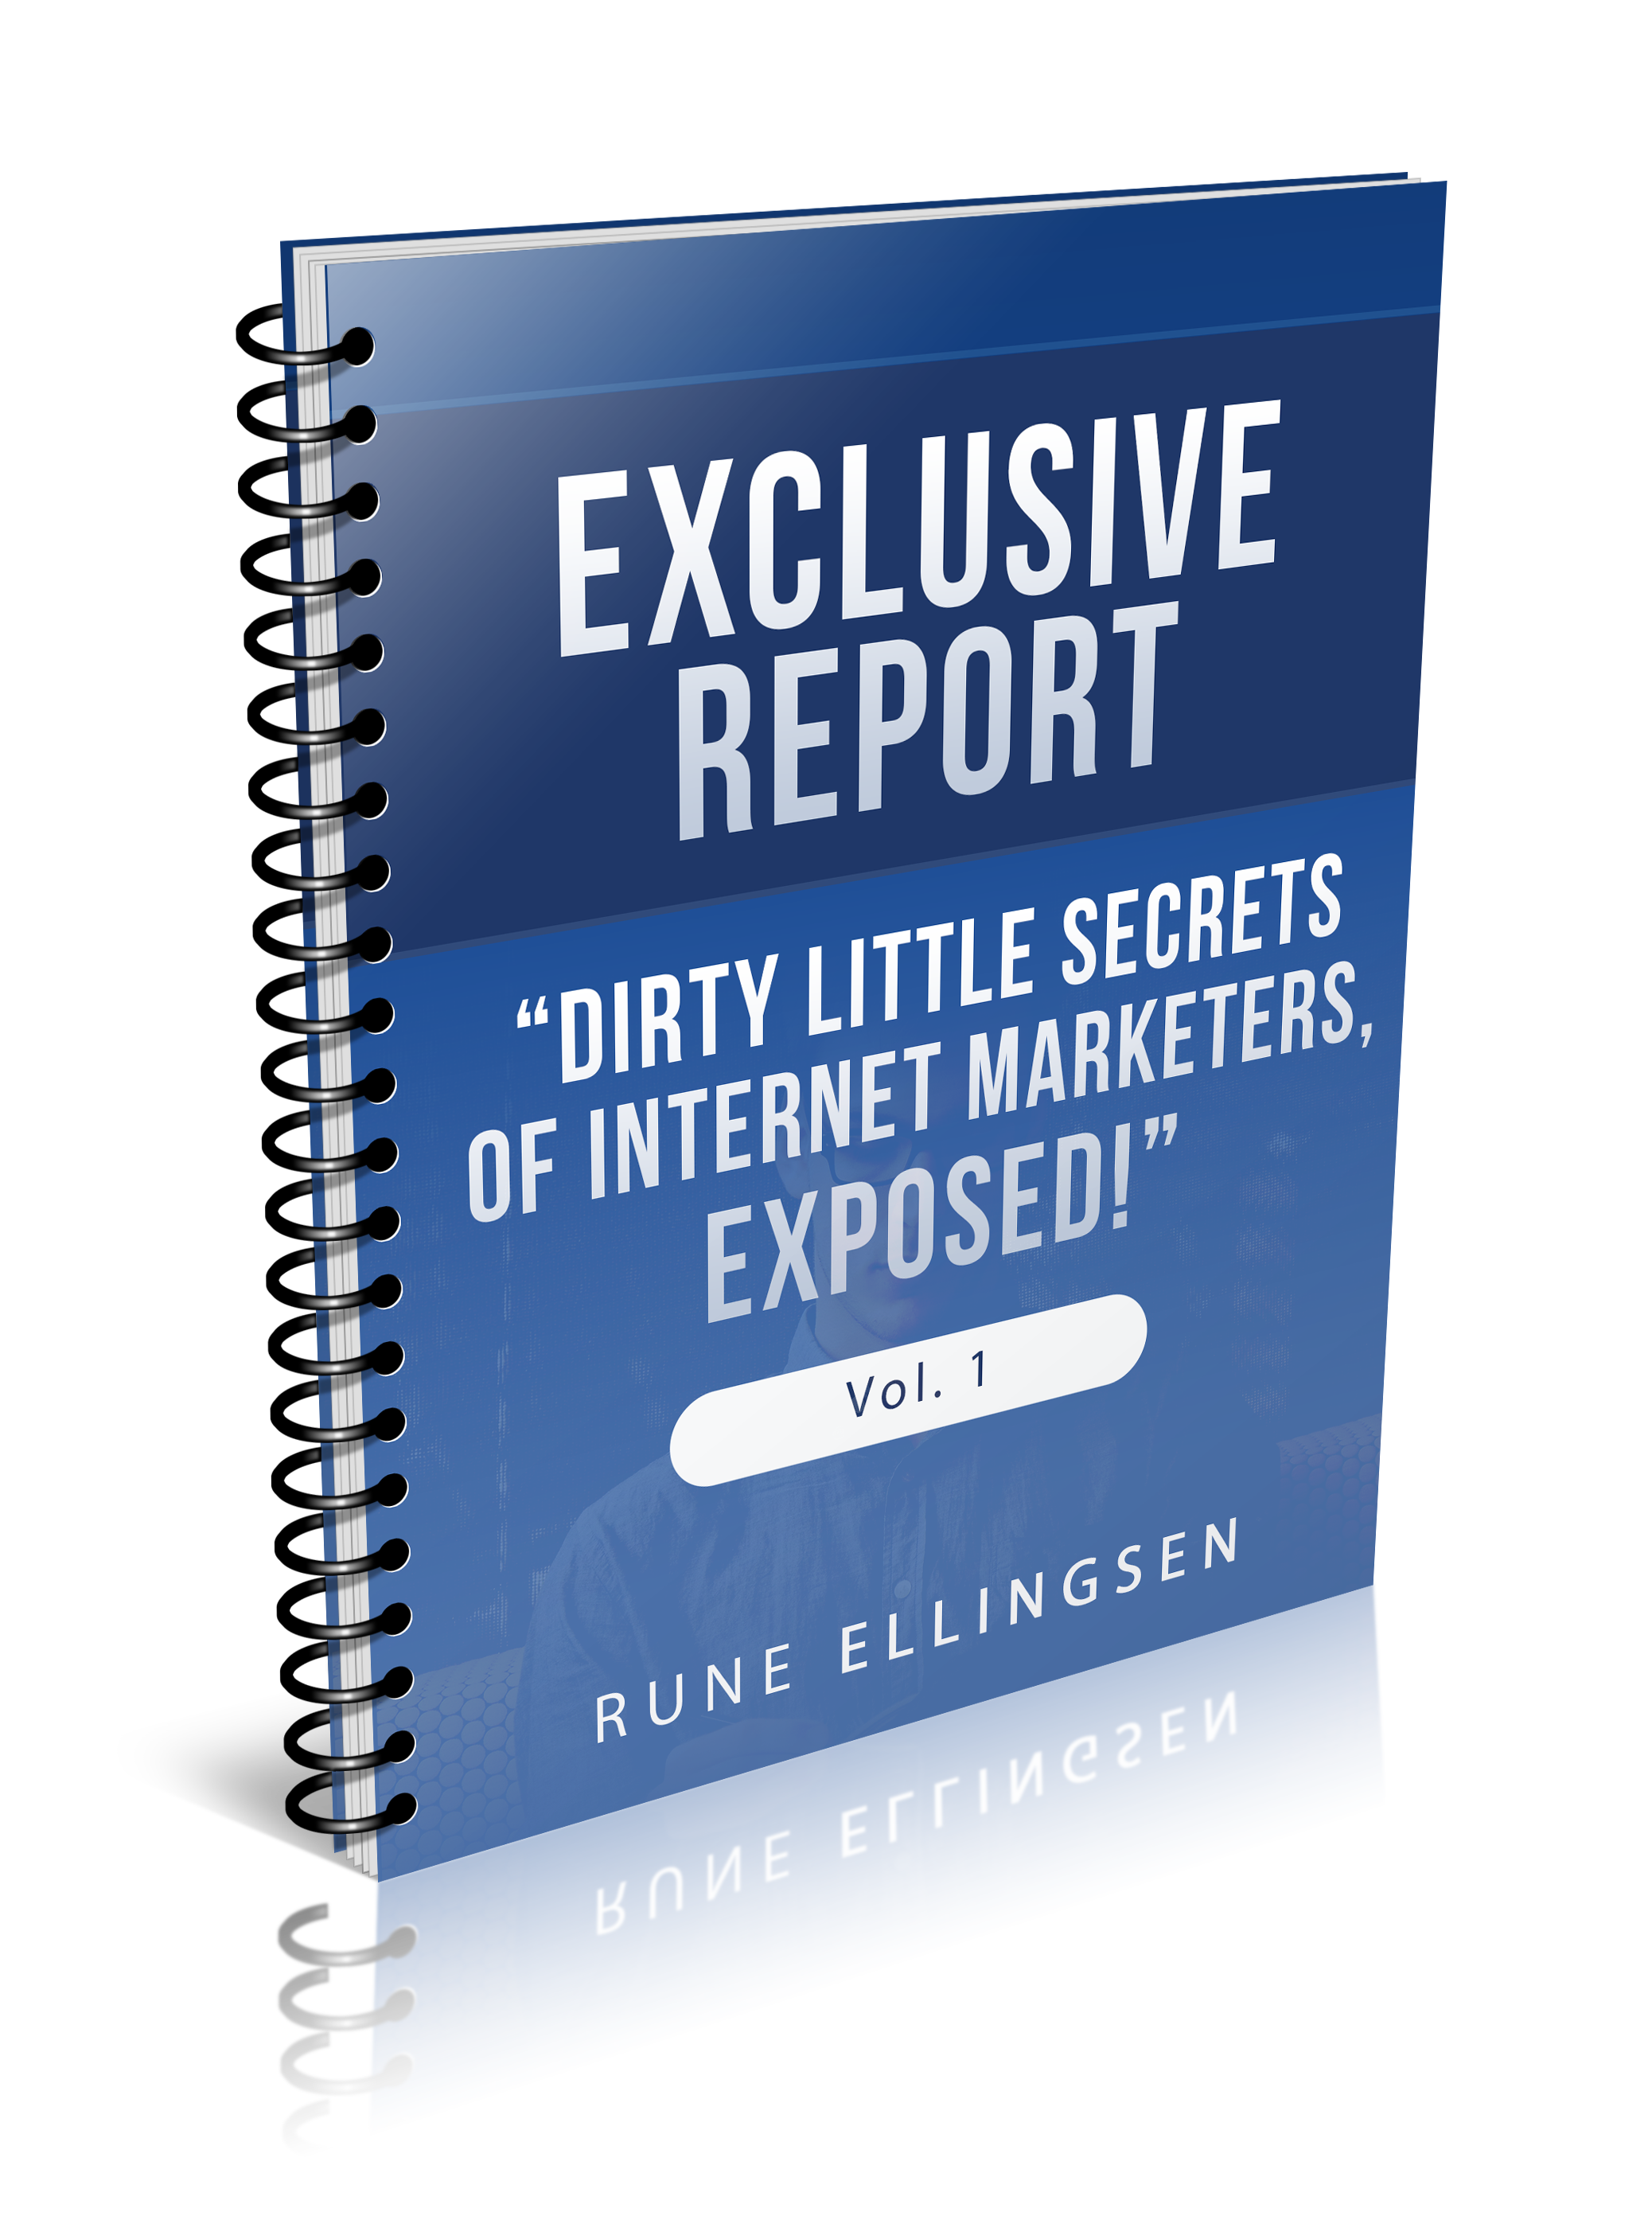 Dirty Little Secrets of Internet Marketers